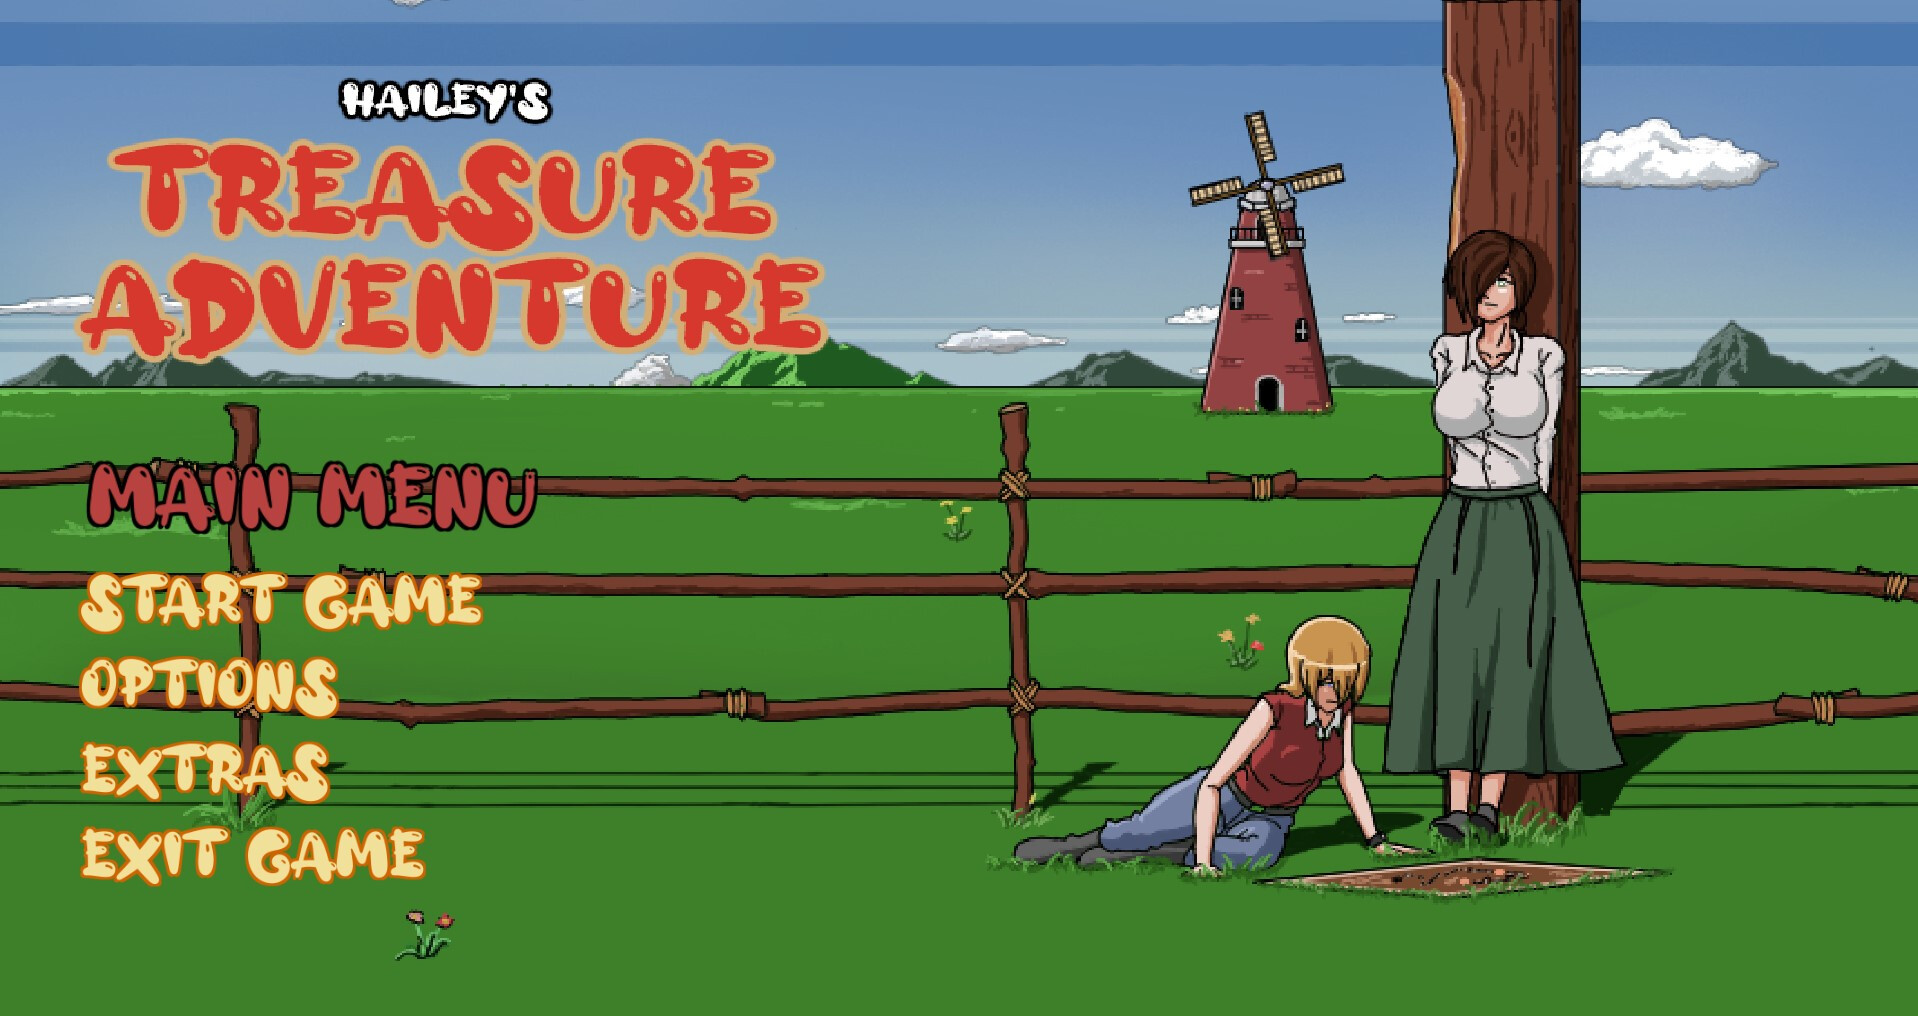 Haileys' Treasure Adventure Main Image